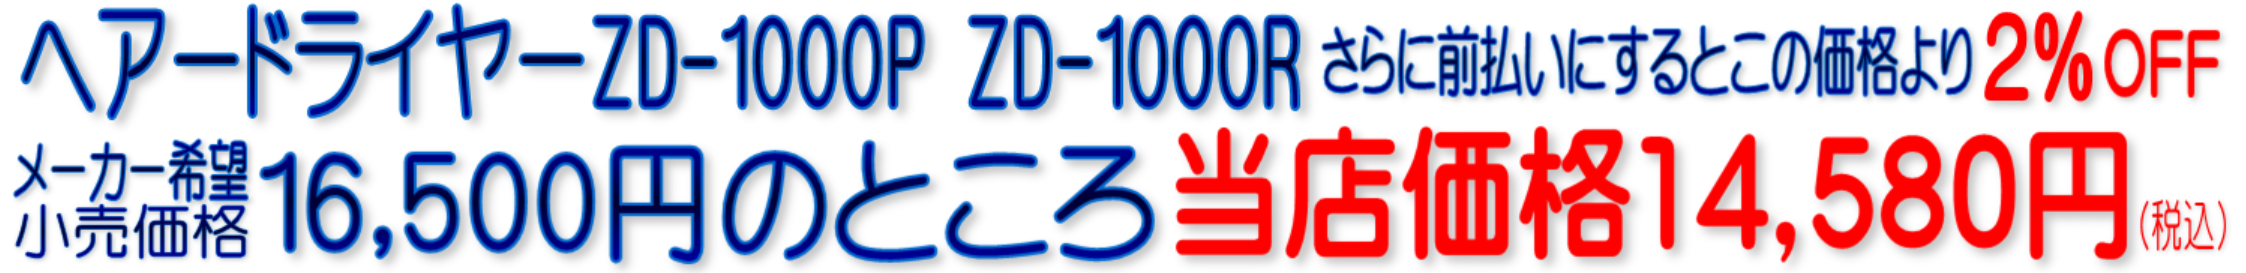 ZD-1000P ZD-1000R 電磁波低減ヘアードライヤー